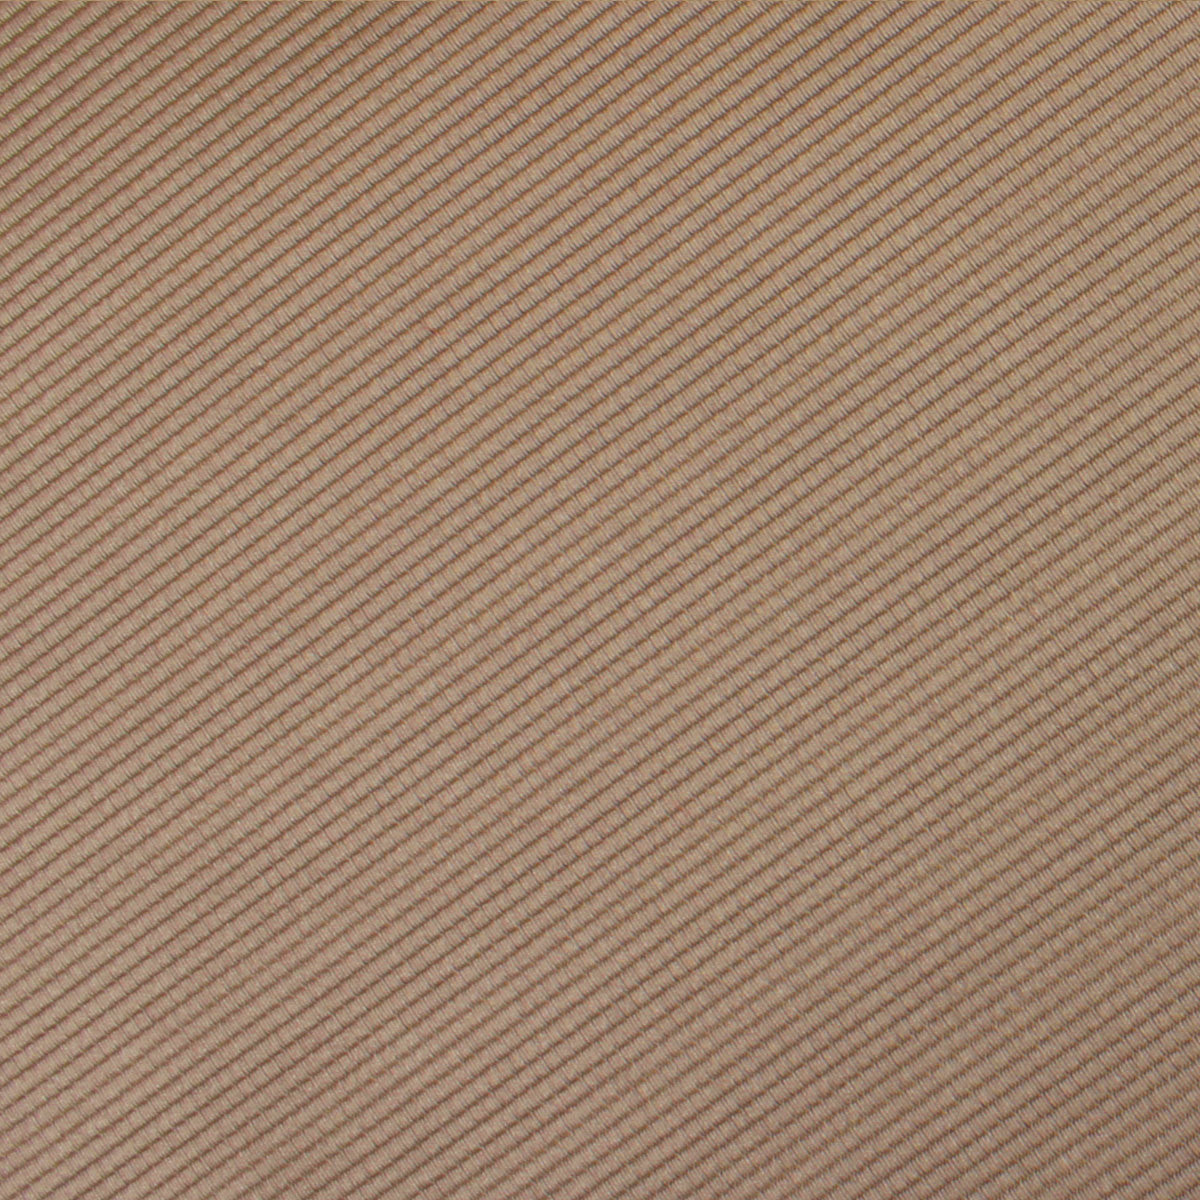 Dune Beige Brown Twill Fabric Swatch